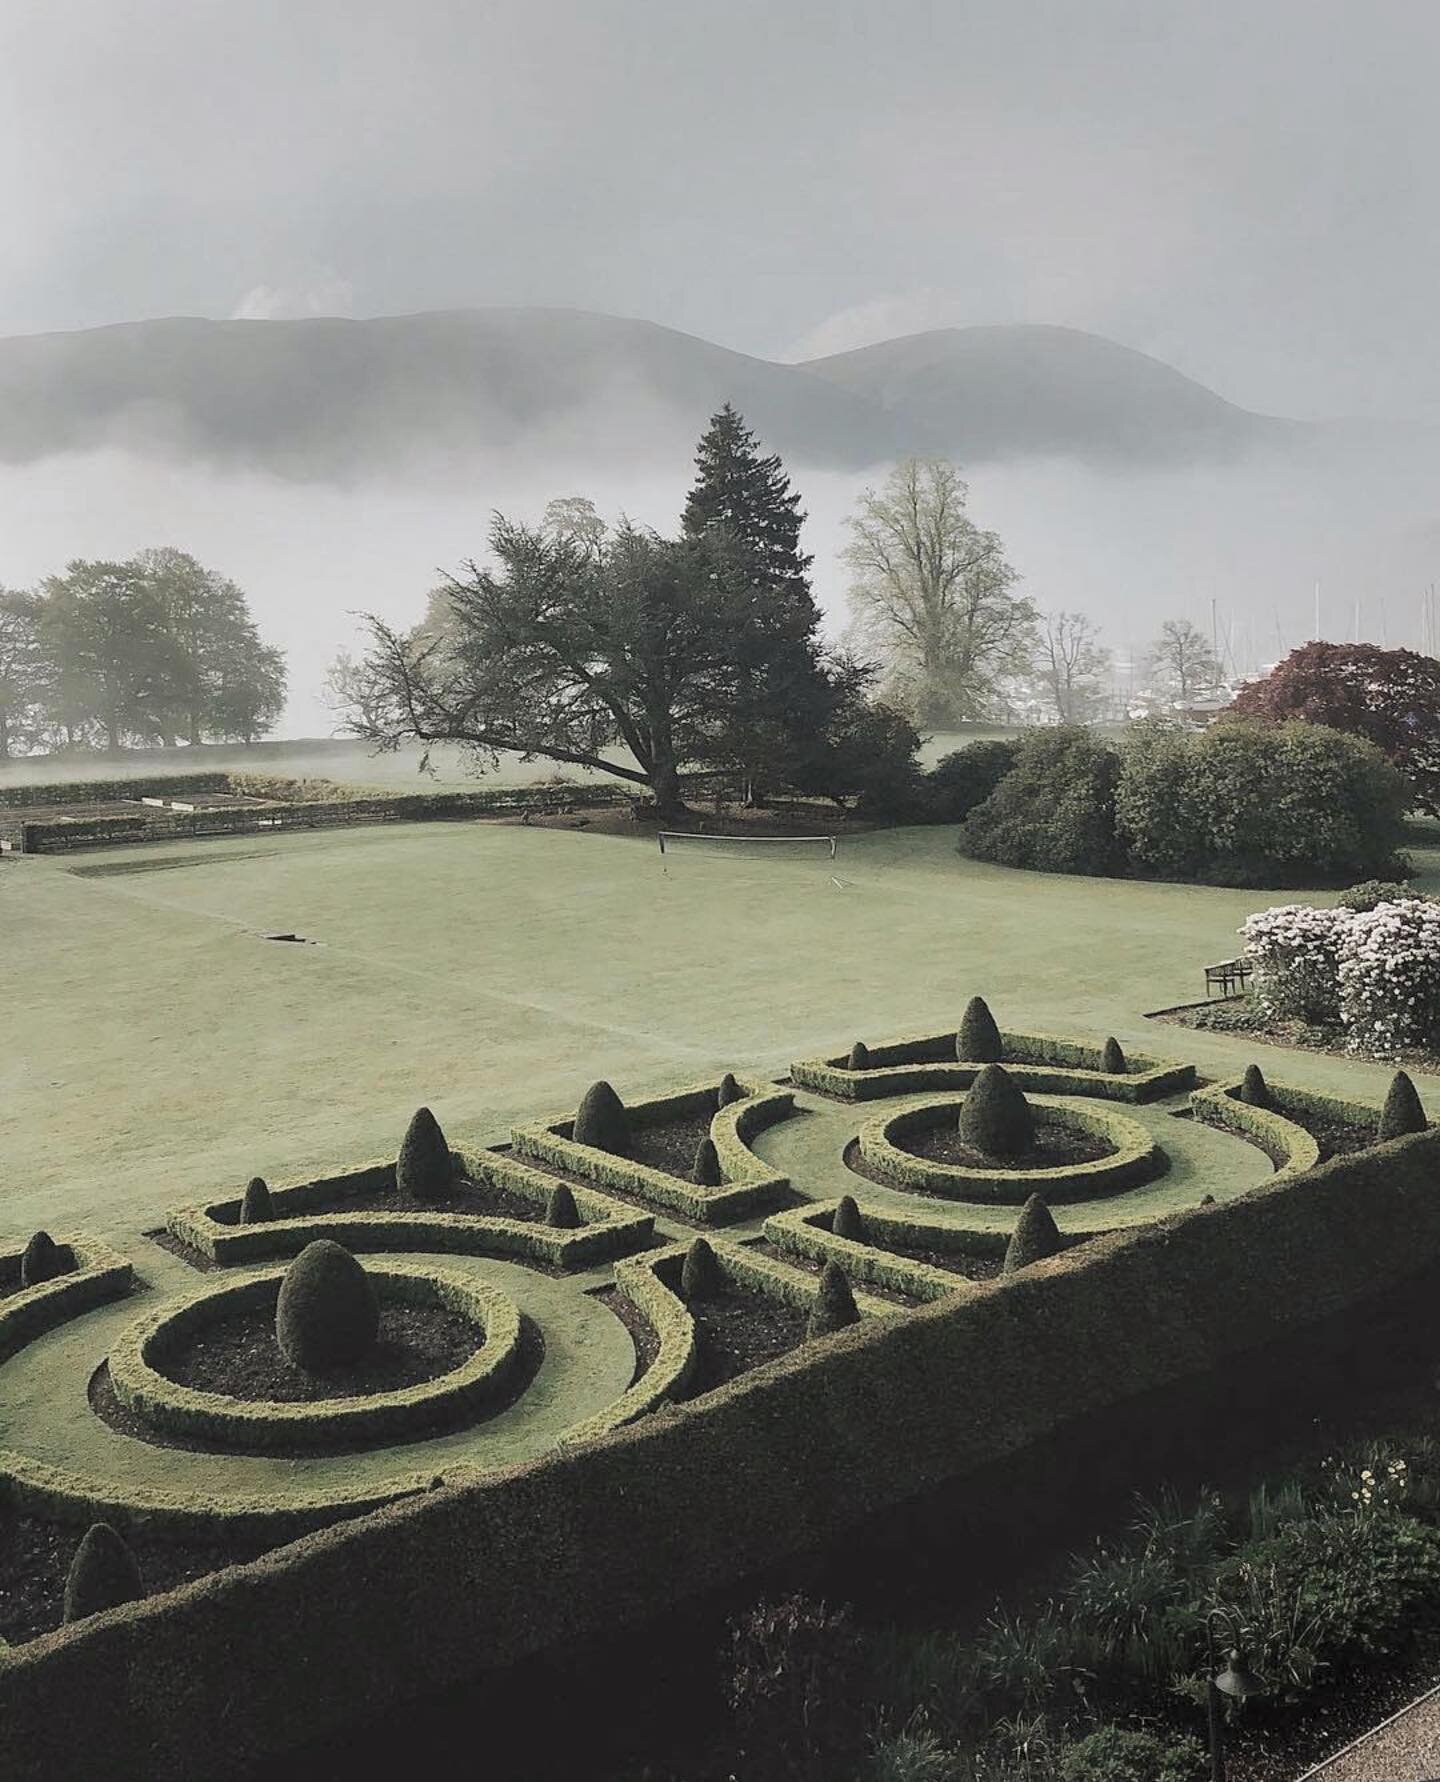 The misty view by @johnstoffer #landscapedesign #landscapephotography #mistymorning